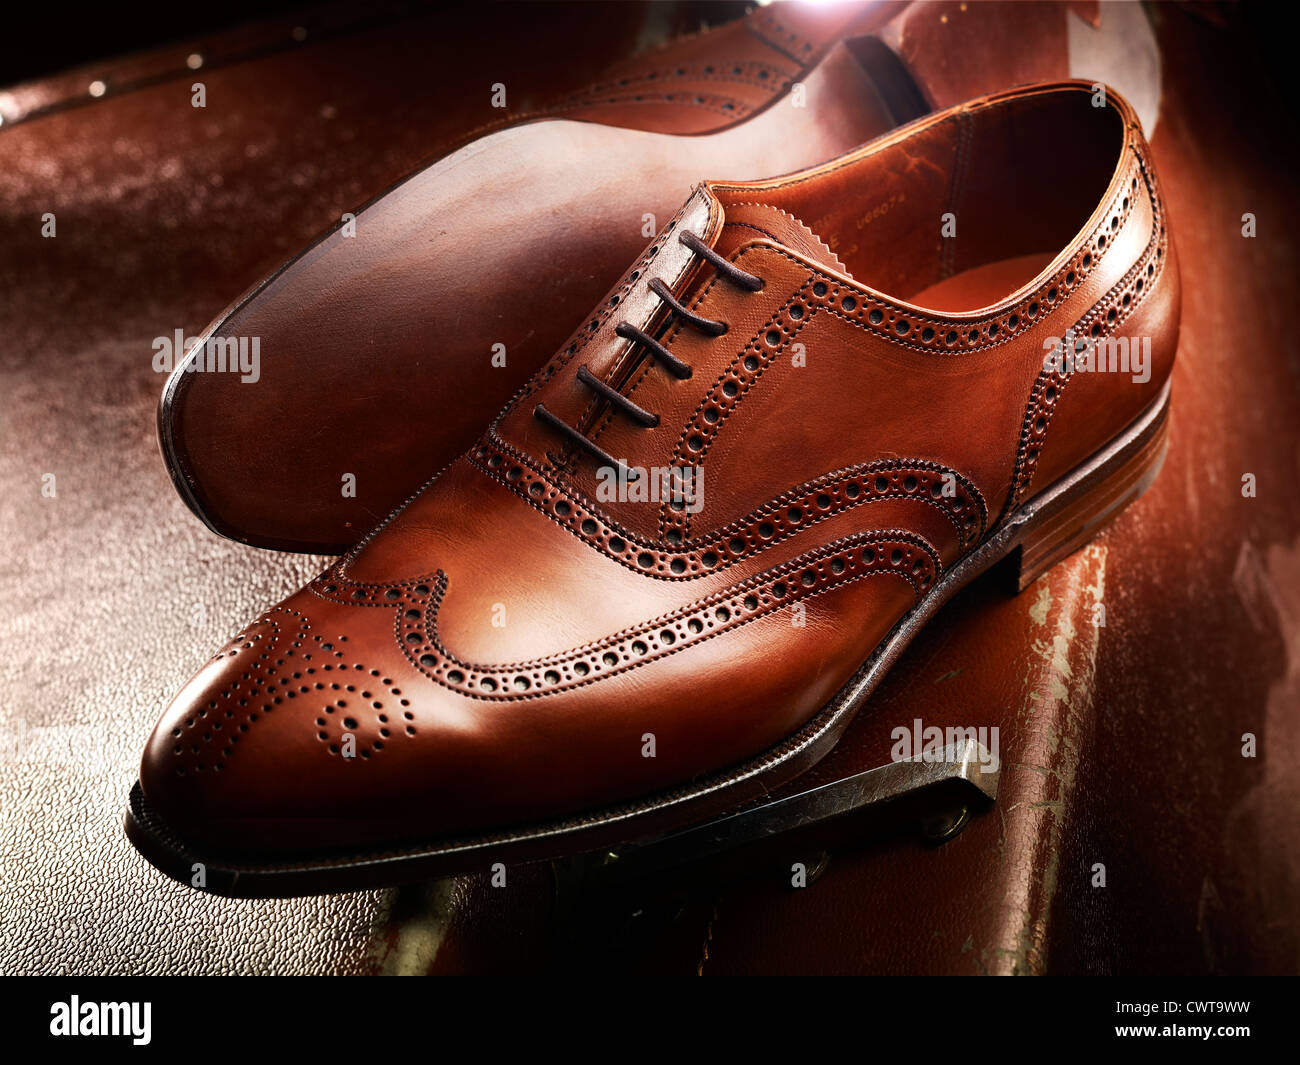 Teure gut braun Leder Brogue Schuhe auf einem Vintage-Leder-Koffer  Stockfotografie - Alamy